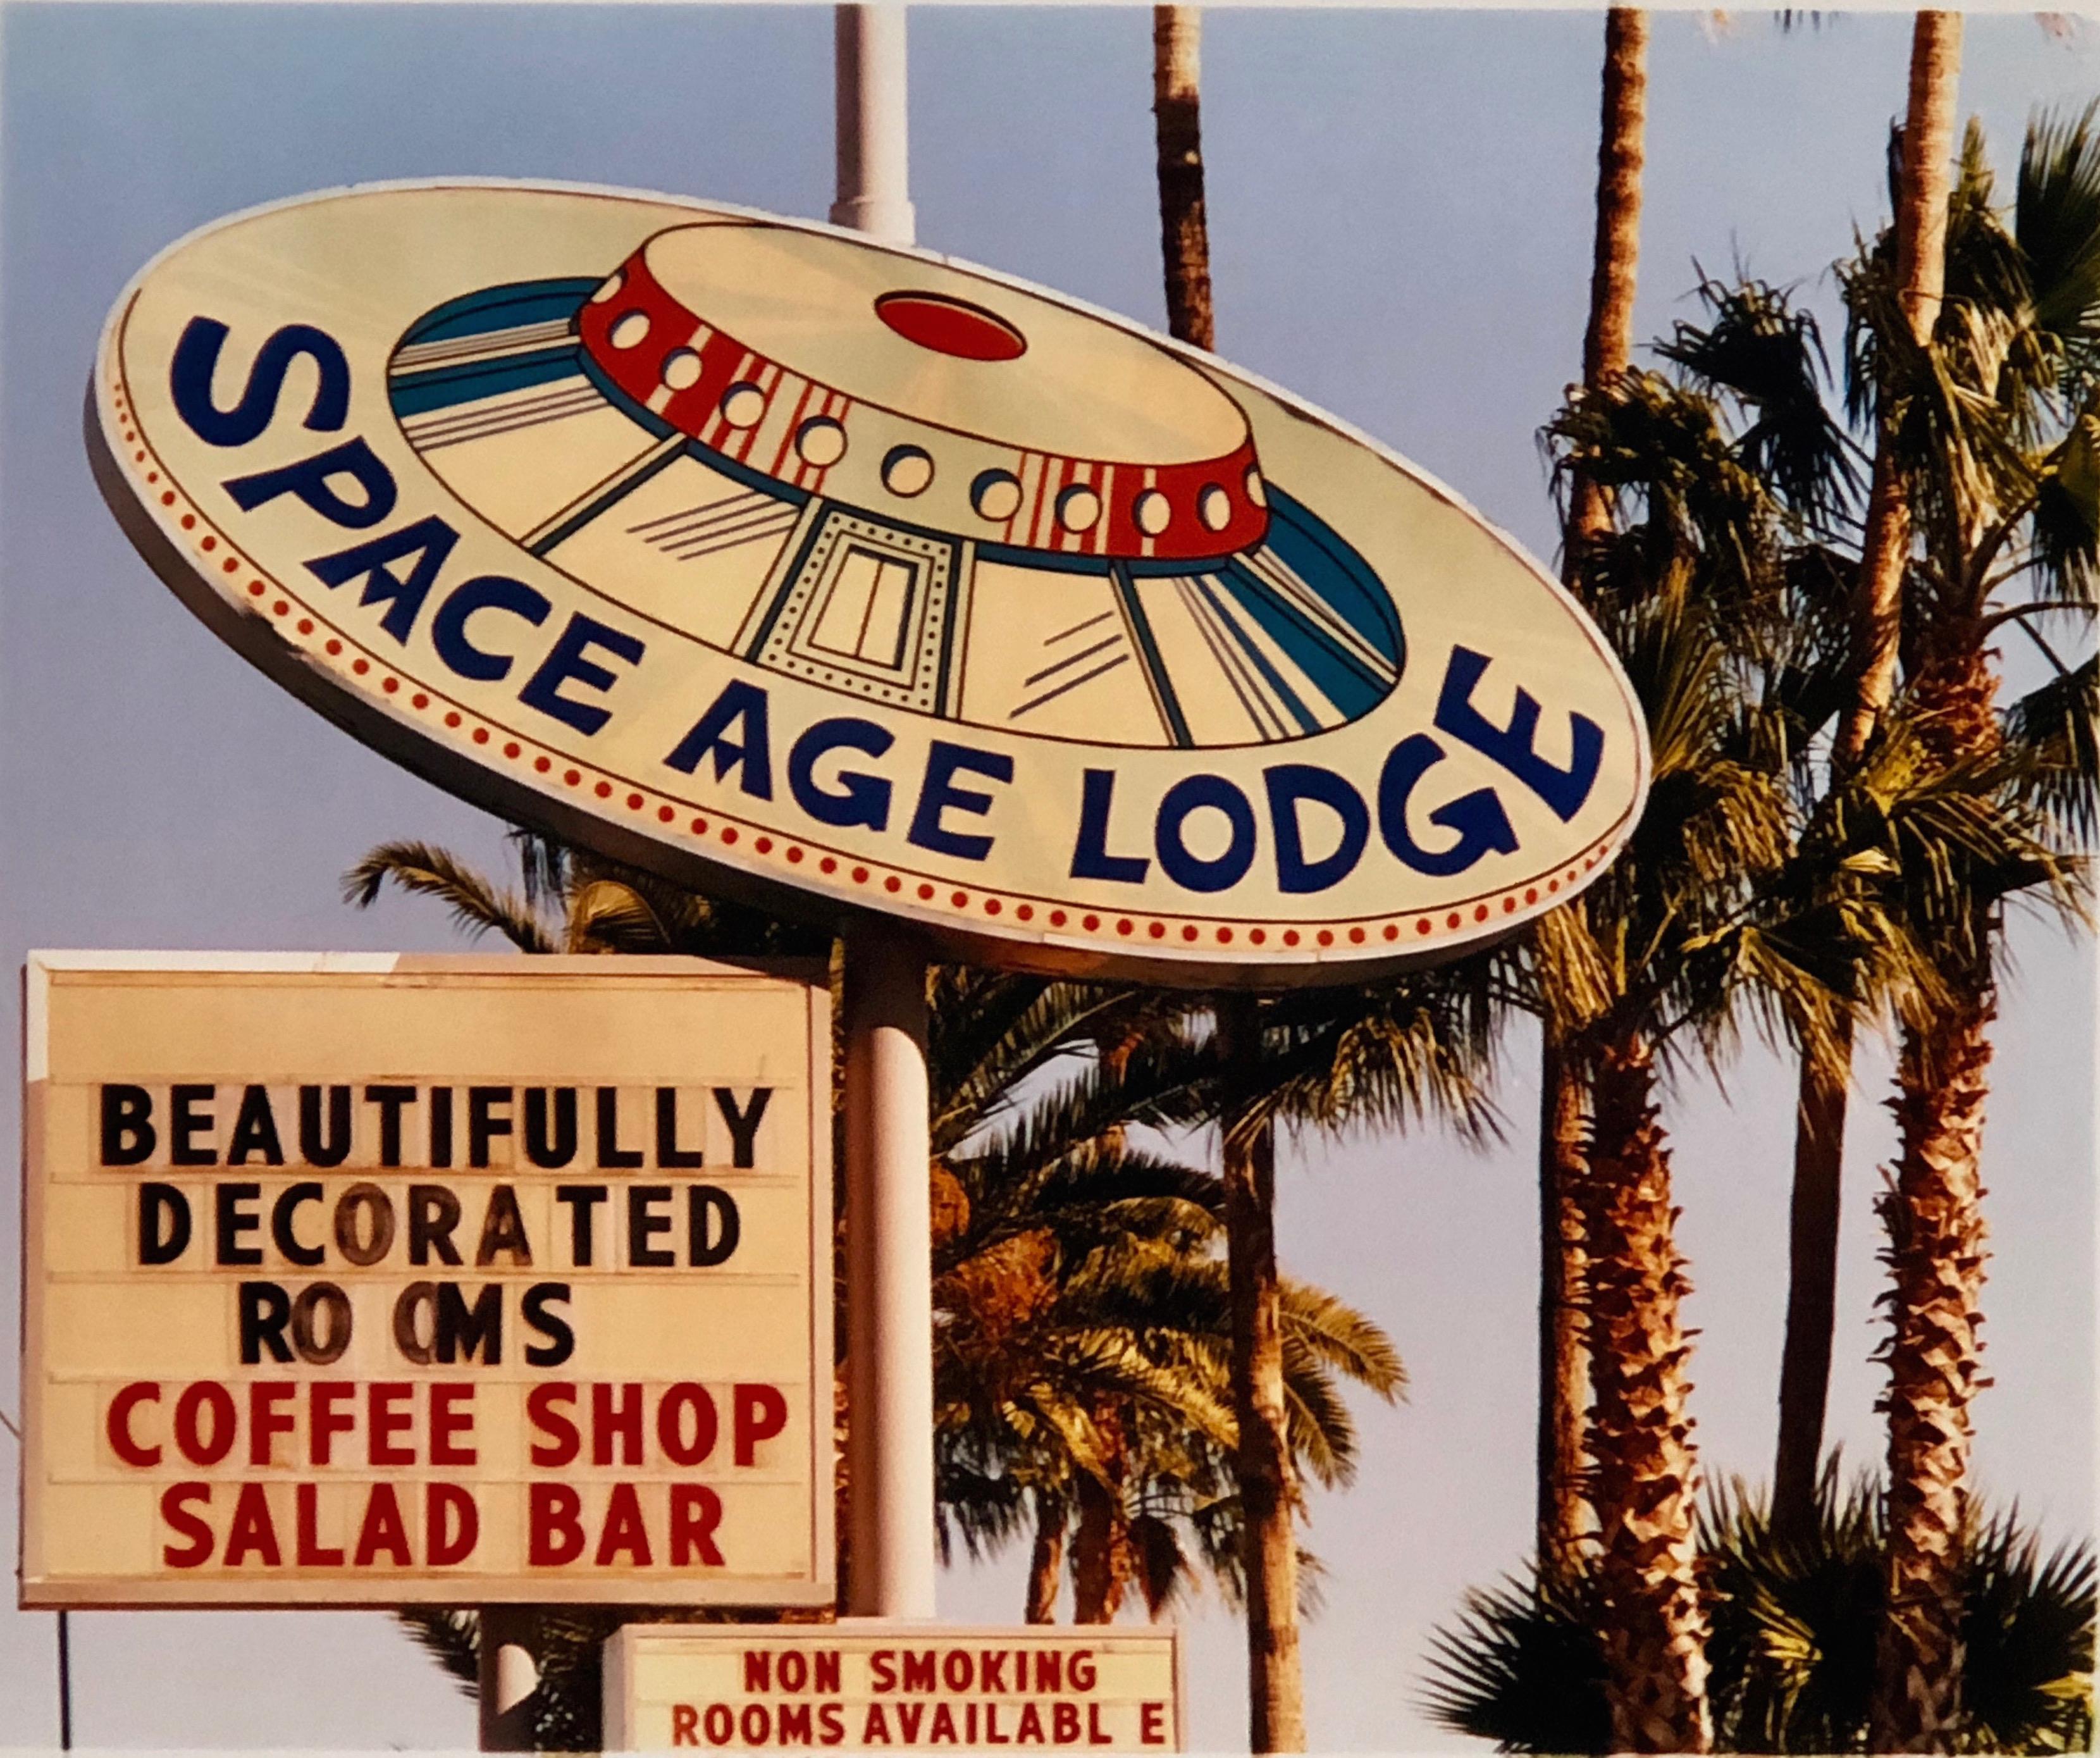 Space Age Lodge, Gila Bend, Arizona - Contemporary color photograph